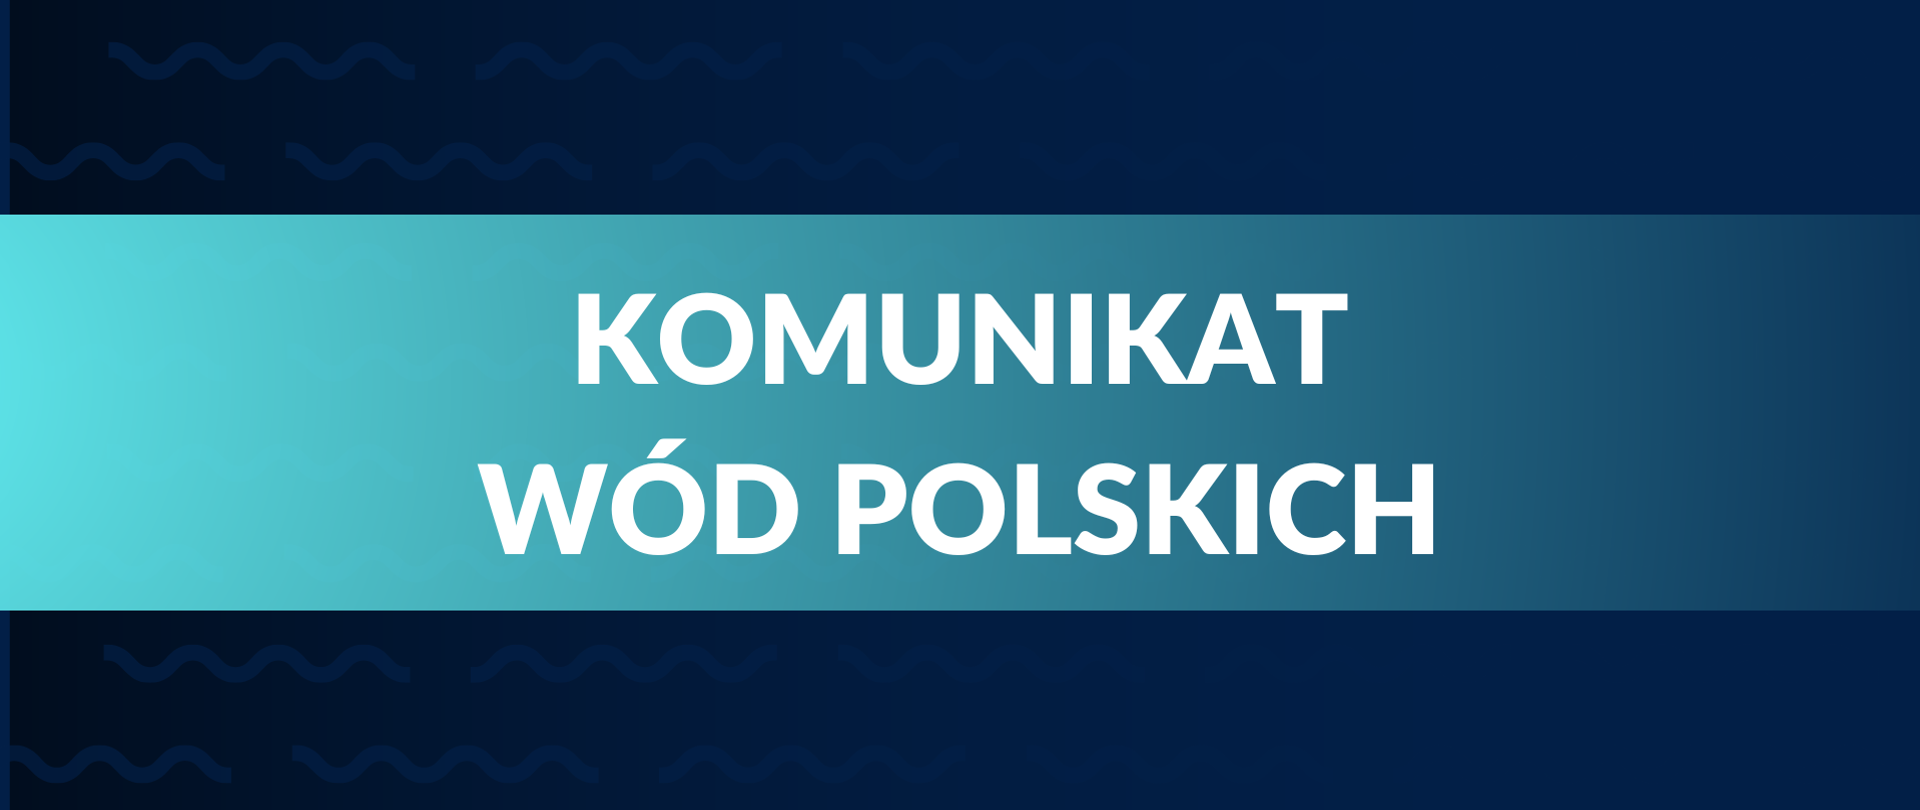 Komunikat Wód Polskich